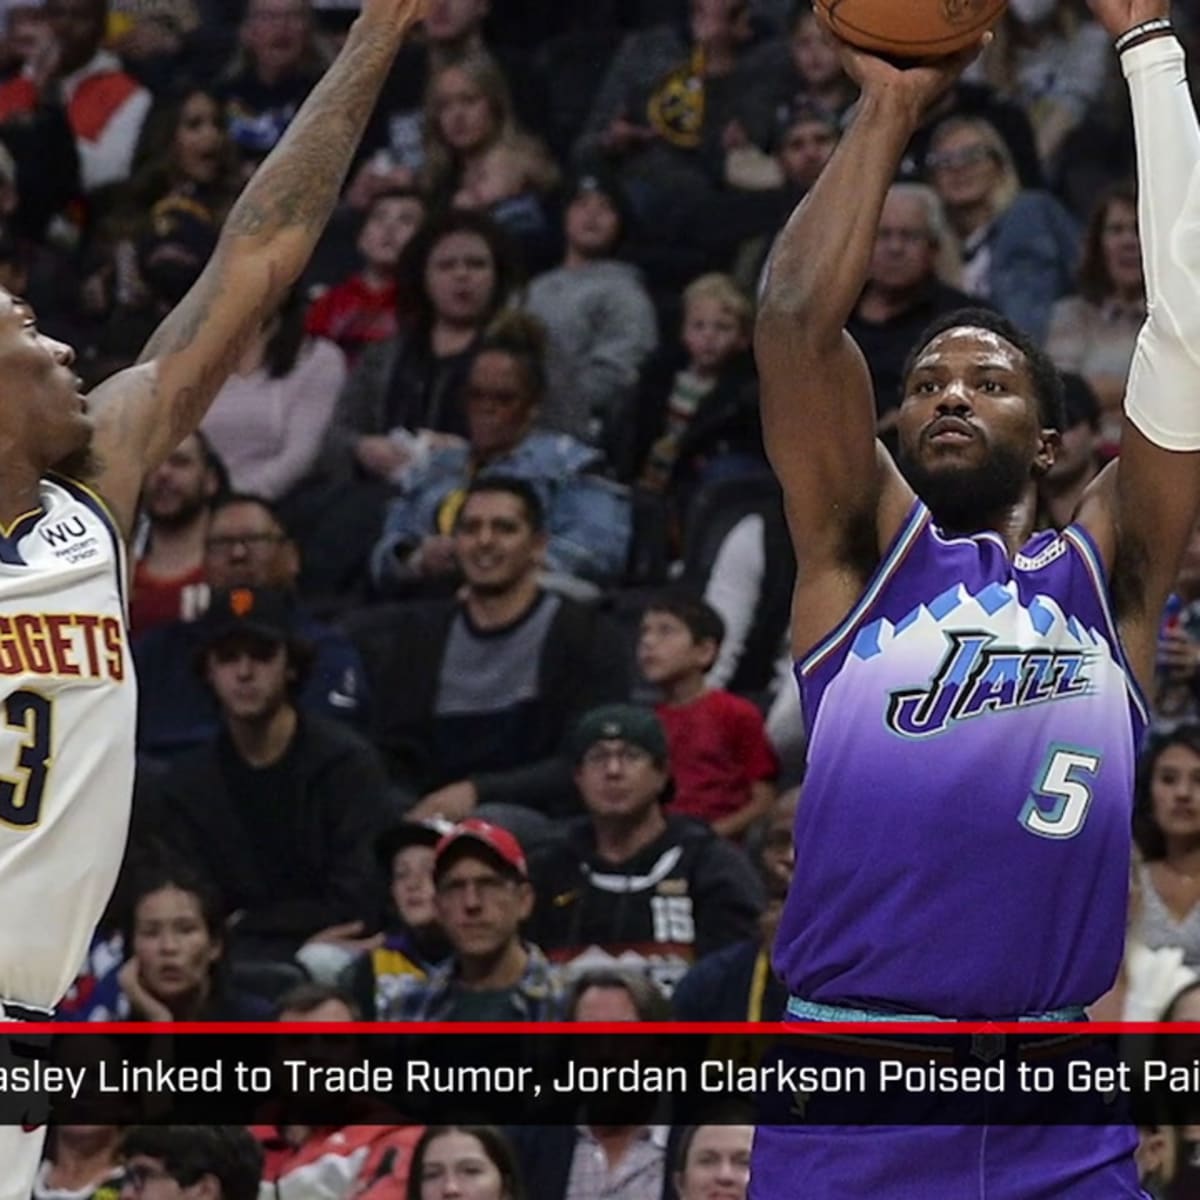 Will the Jazz's hot start stop the team from trading Jordan Clarkson?